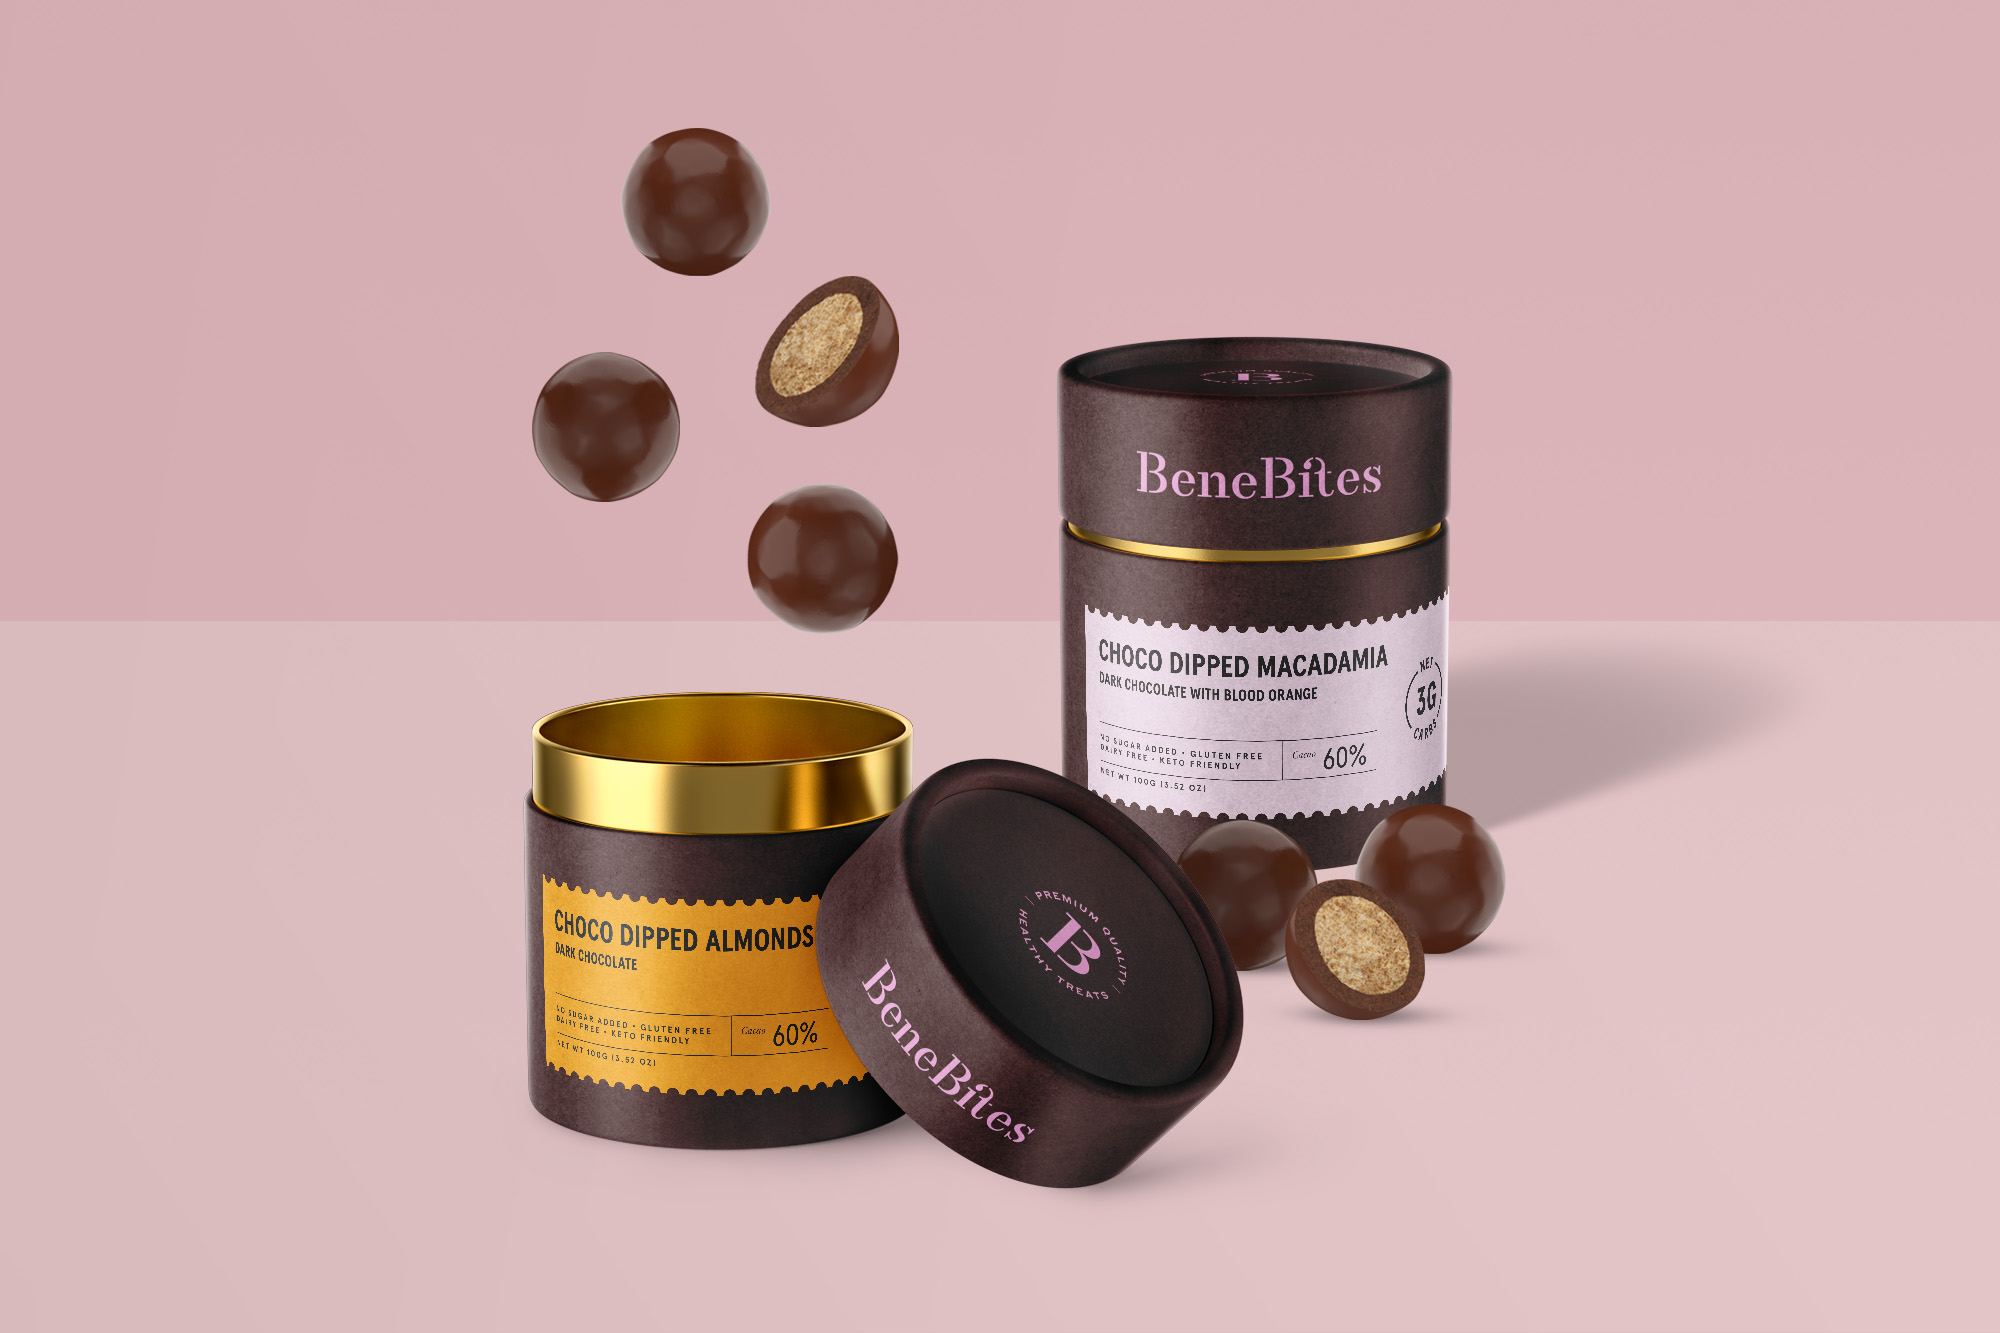 Benebites Keto Friendly Chocolate Branding and Design by Widarto Impact